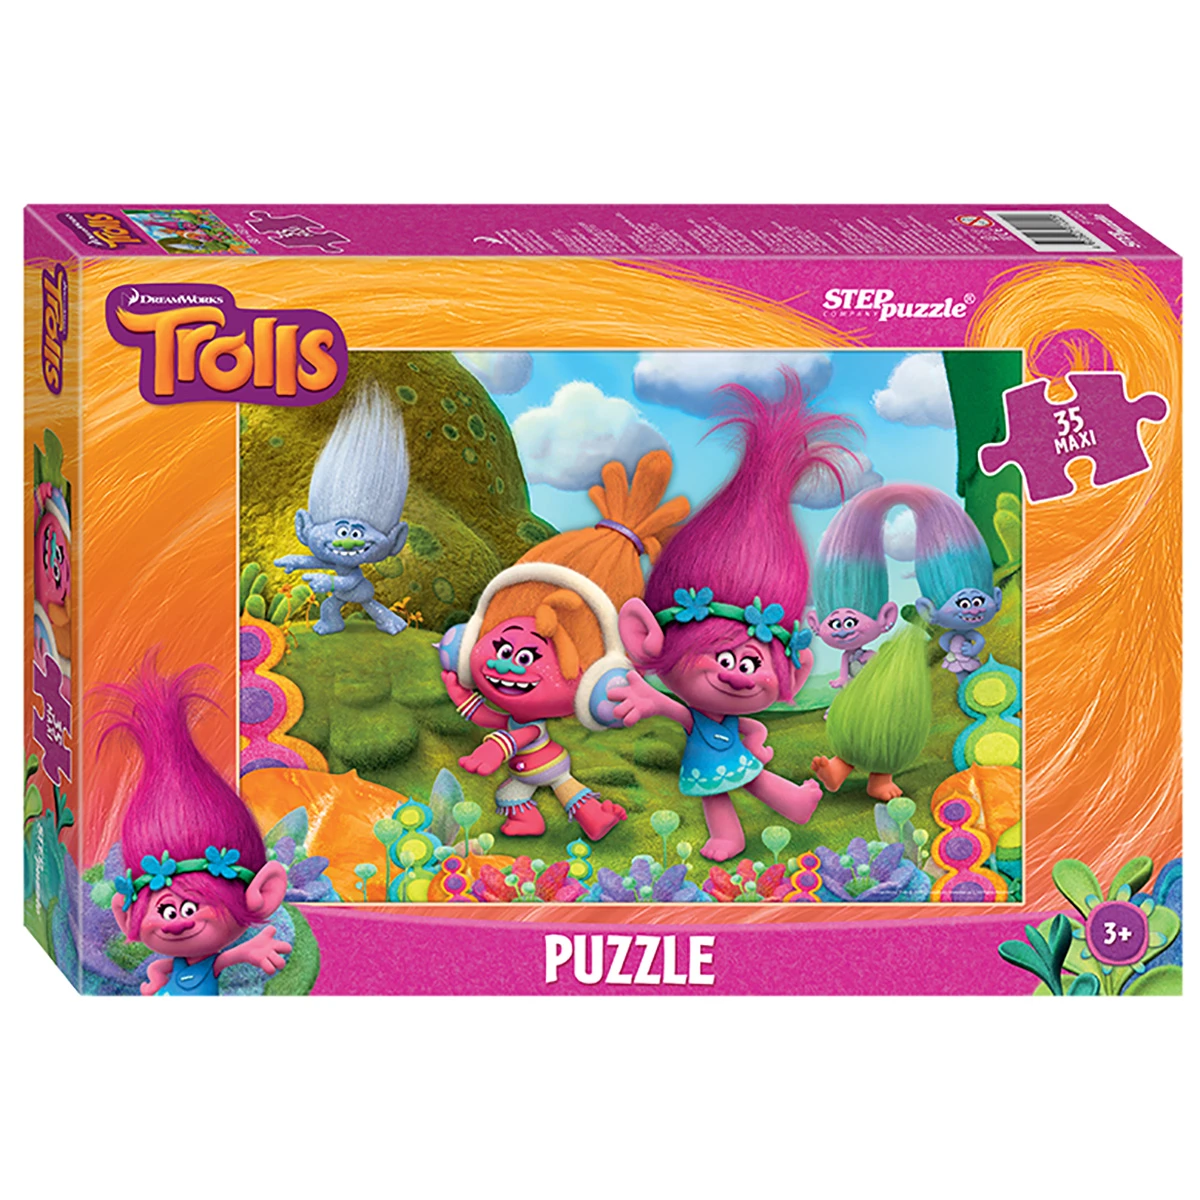 Арт.91222 Мозаика "puzzle" 35 MAXI "Trolls" (DreamWorks)